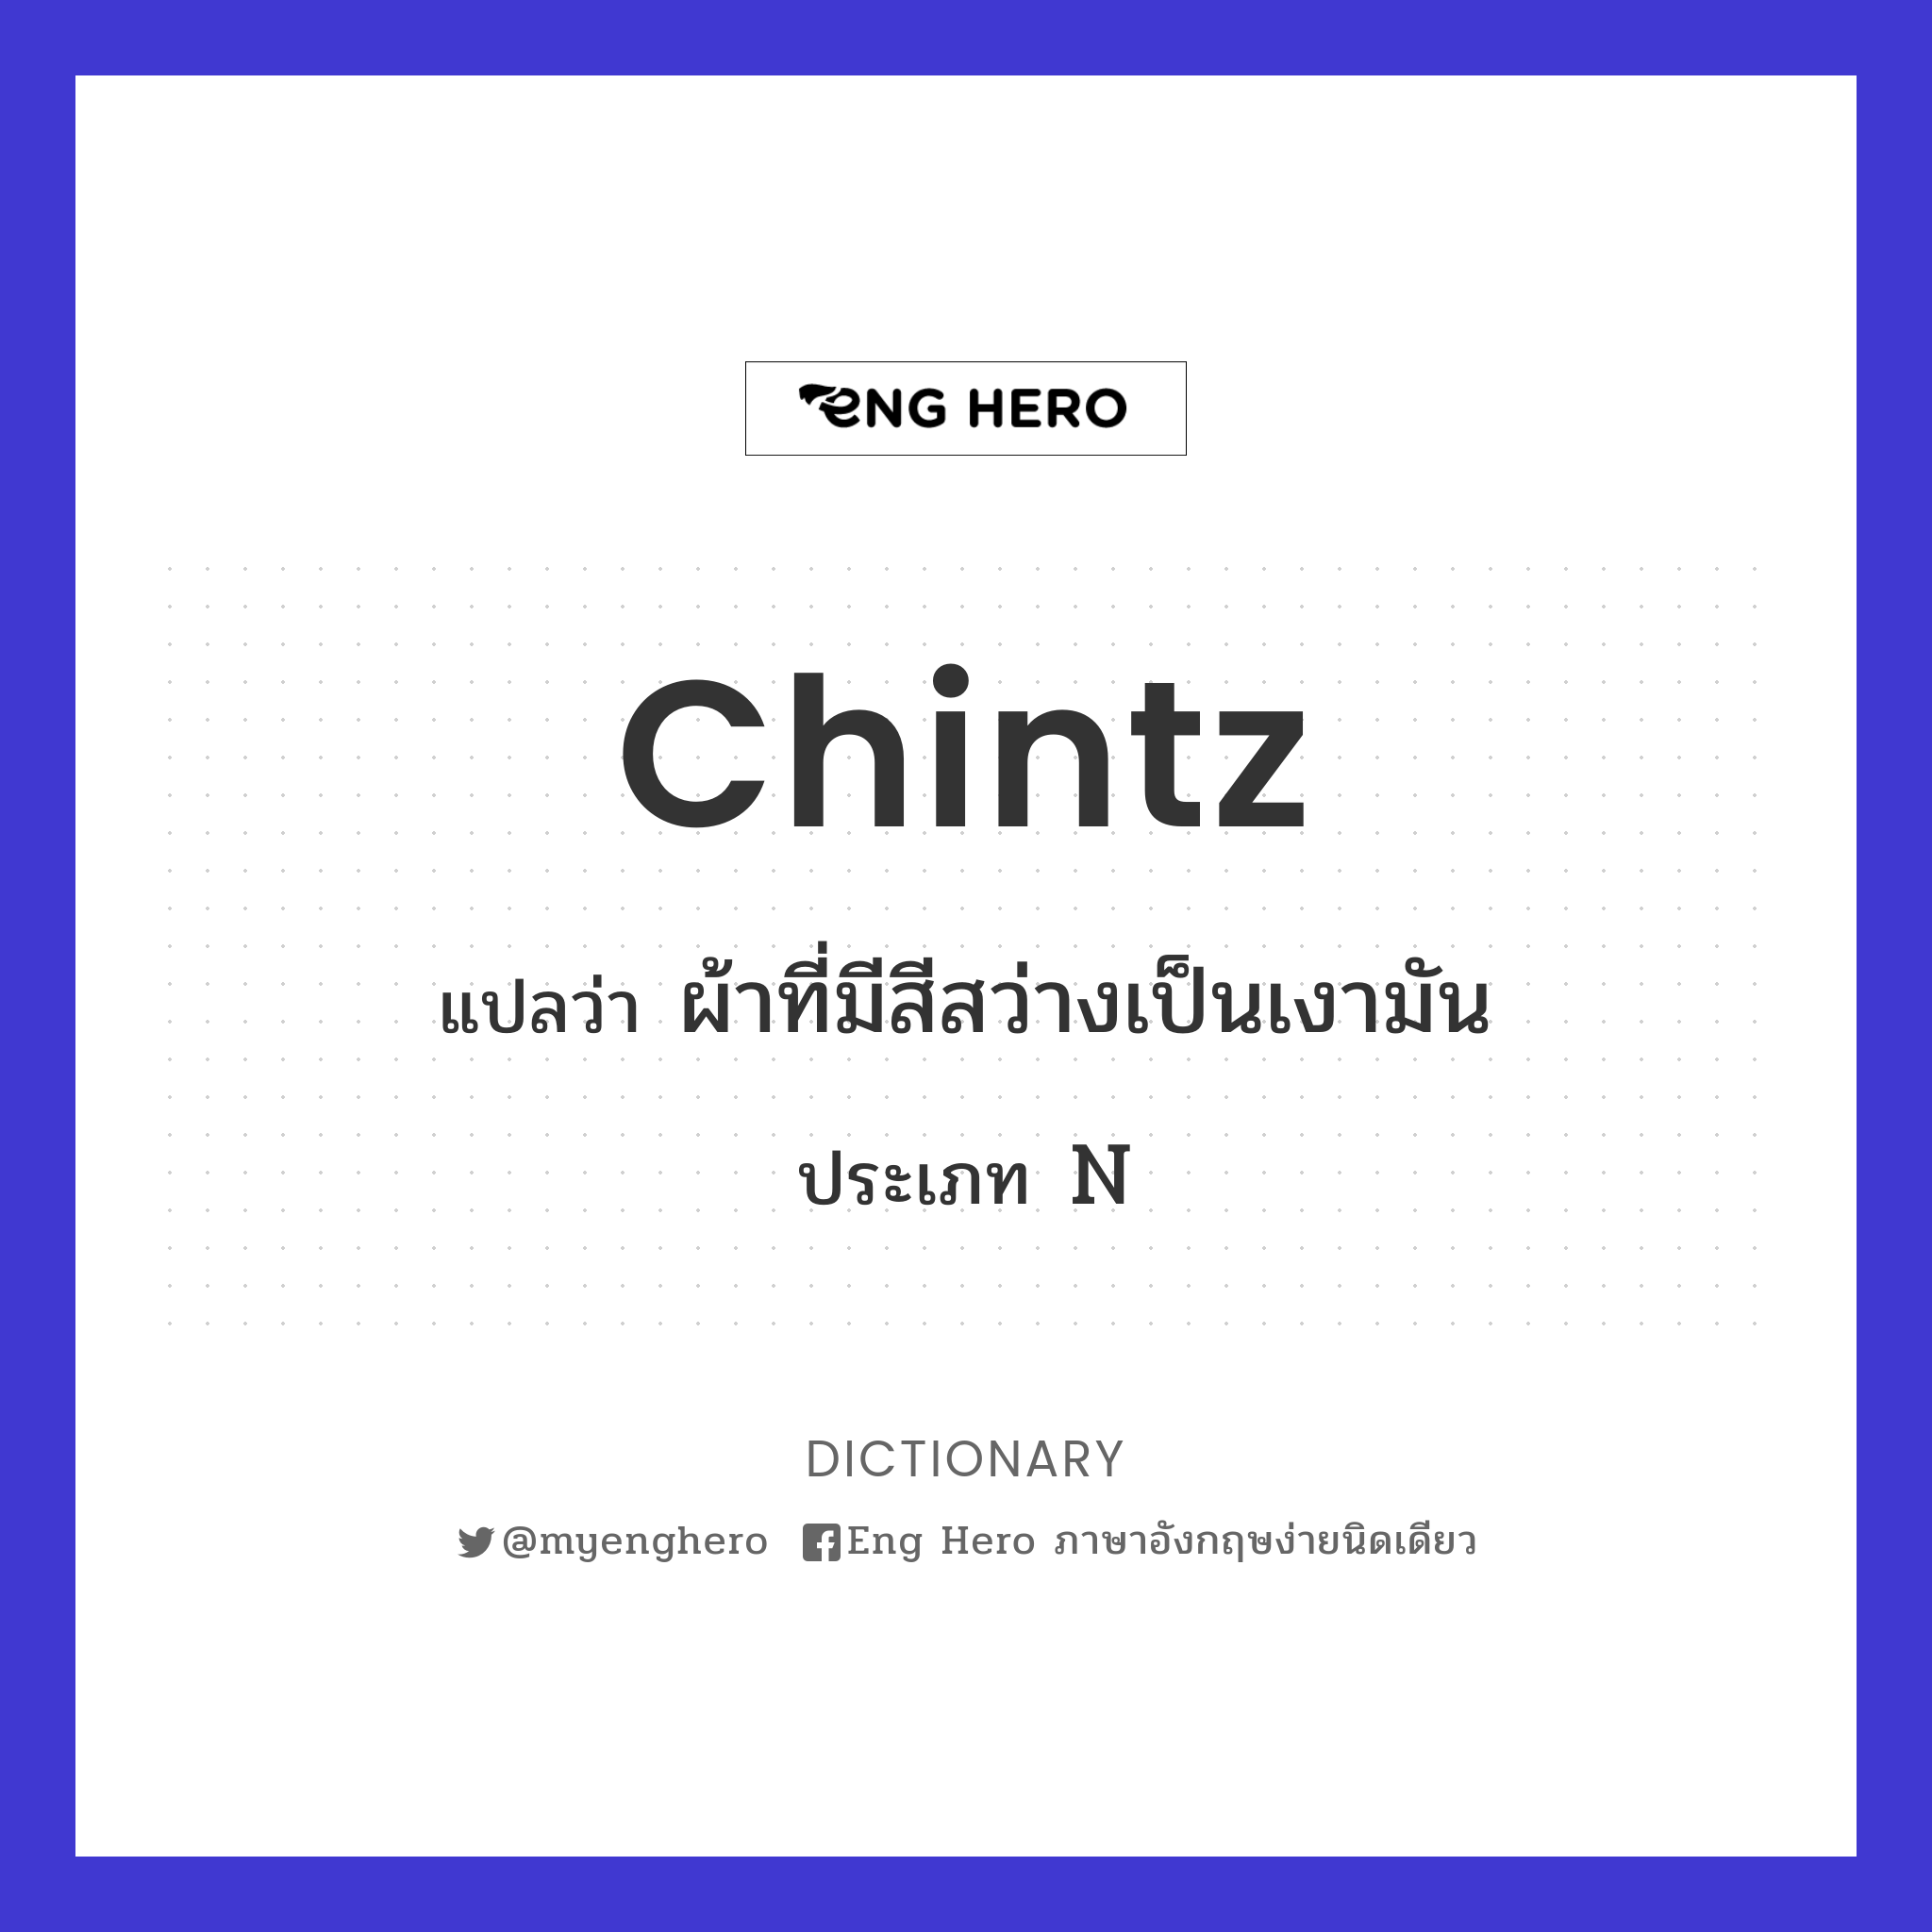 chintz